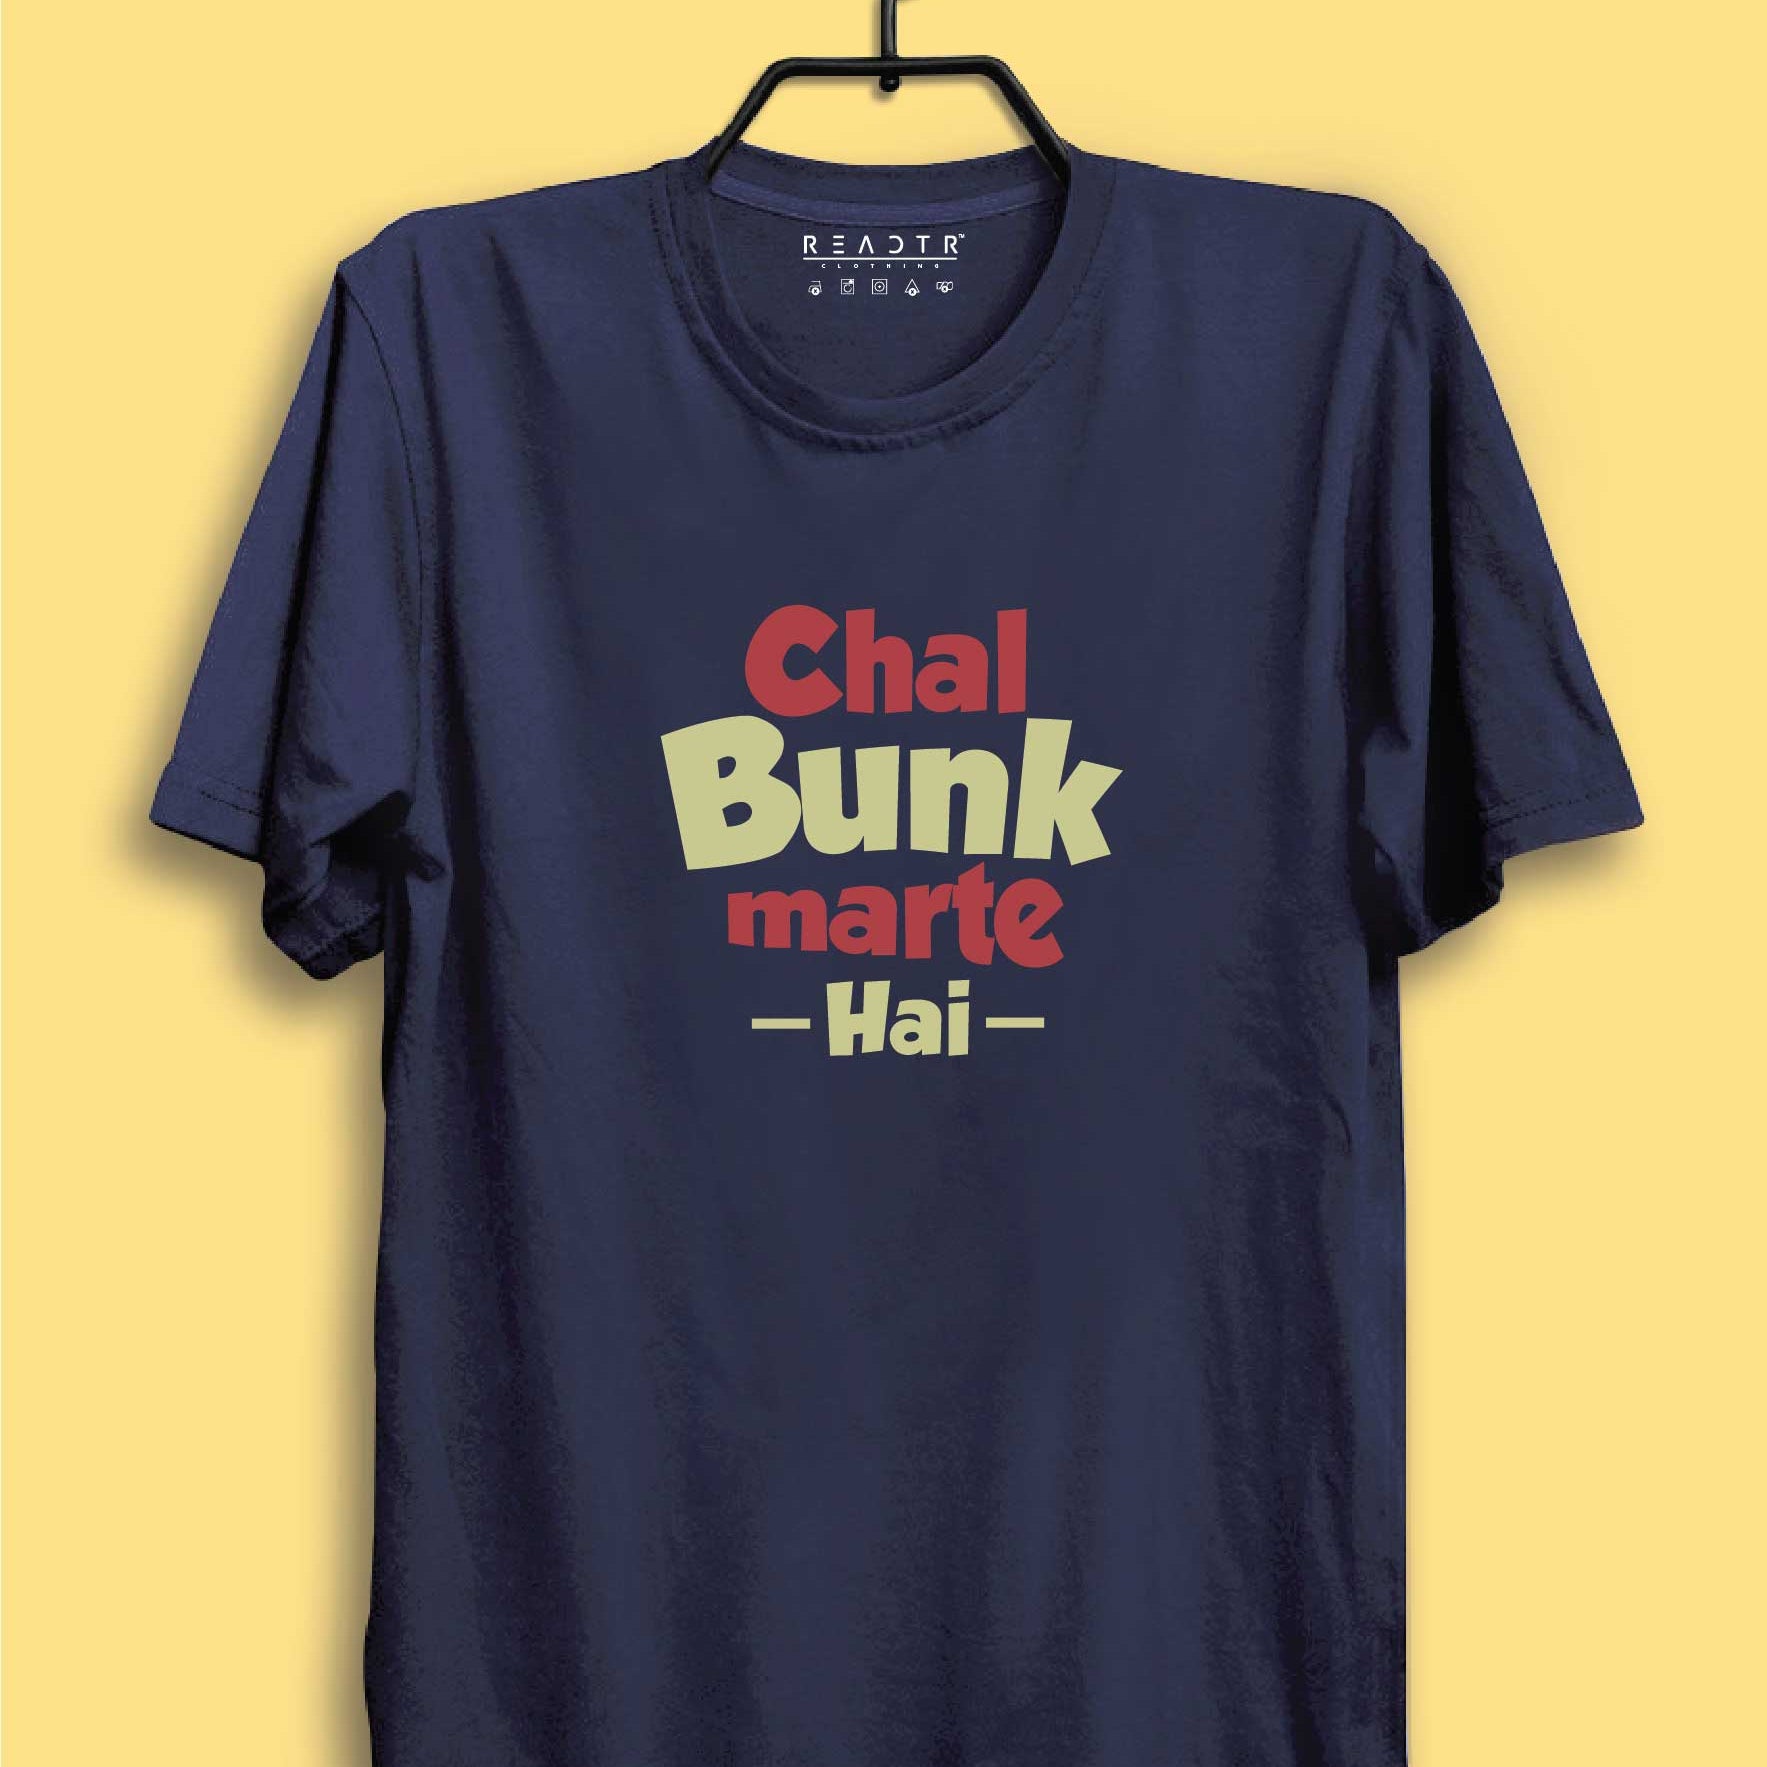 Chal Bunk Marte Hai Reactr Tshirts For Men - Eyewearlabs